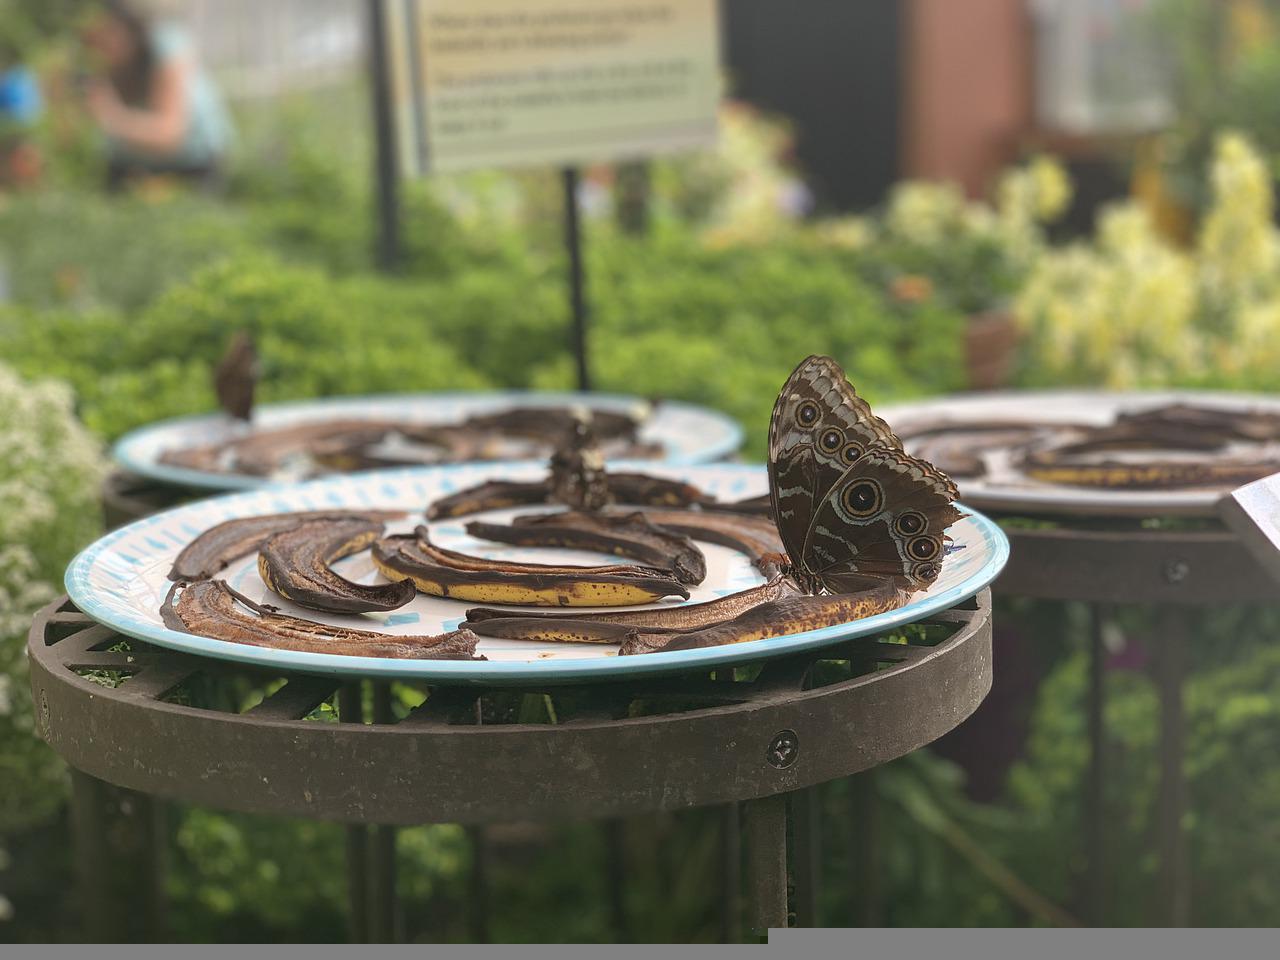 Butterflies at a conservatory, eating rotten banana peels